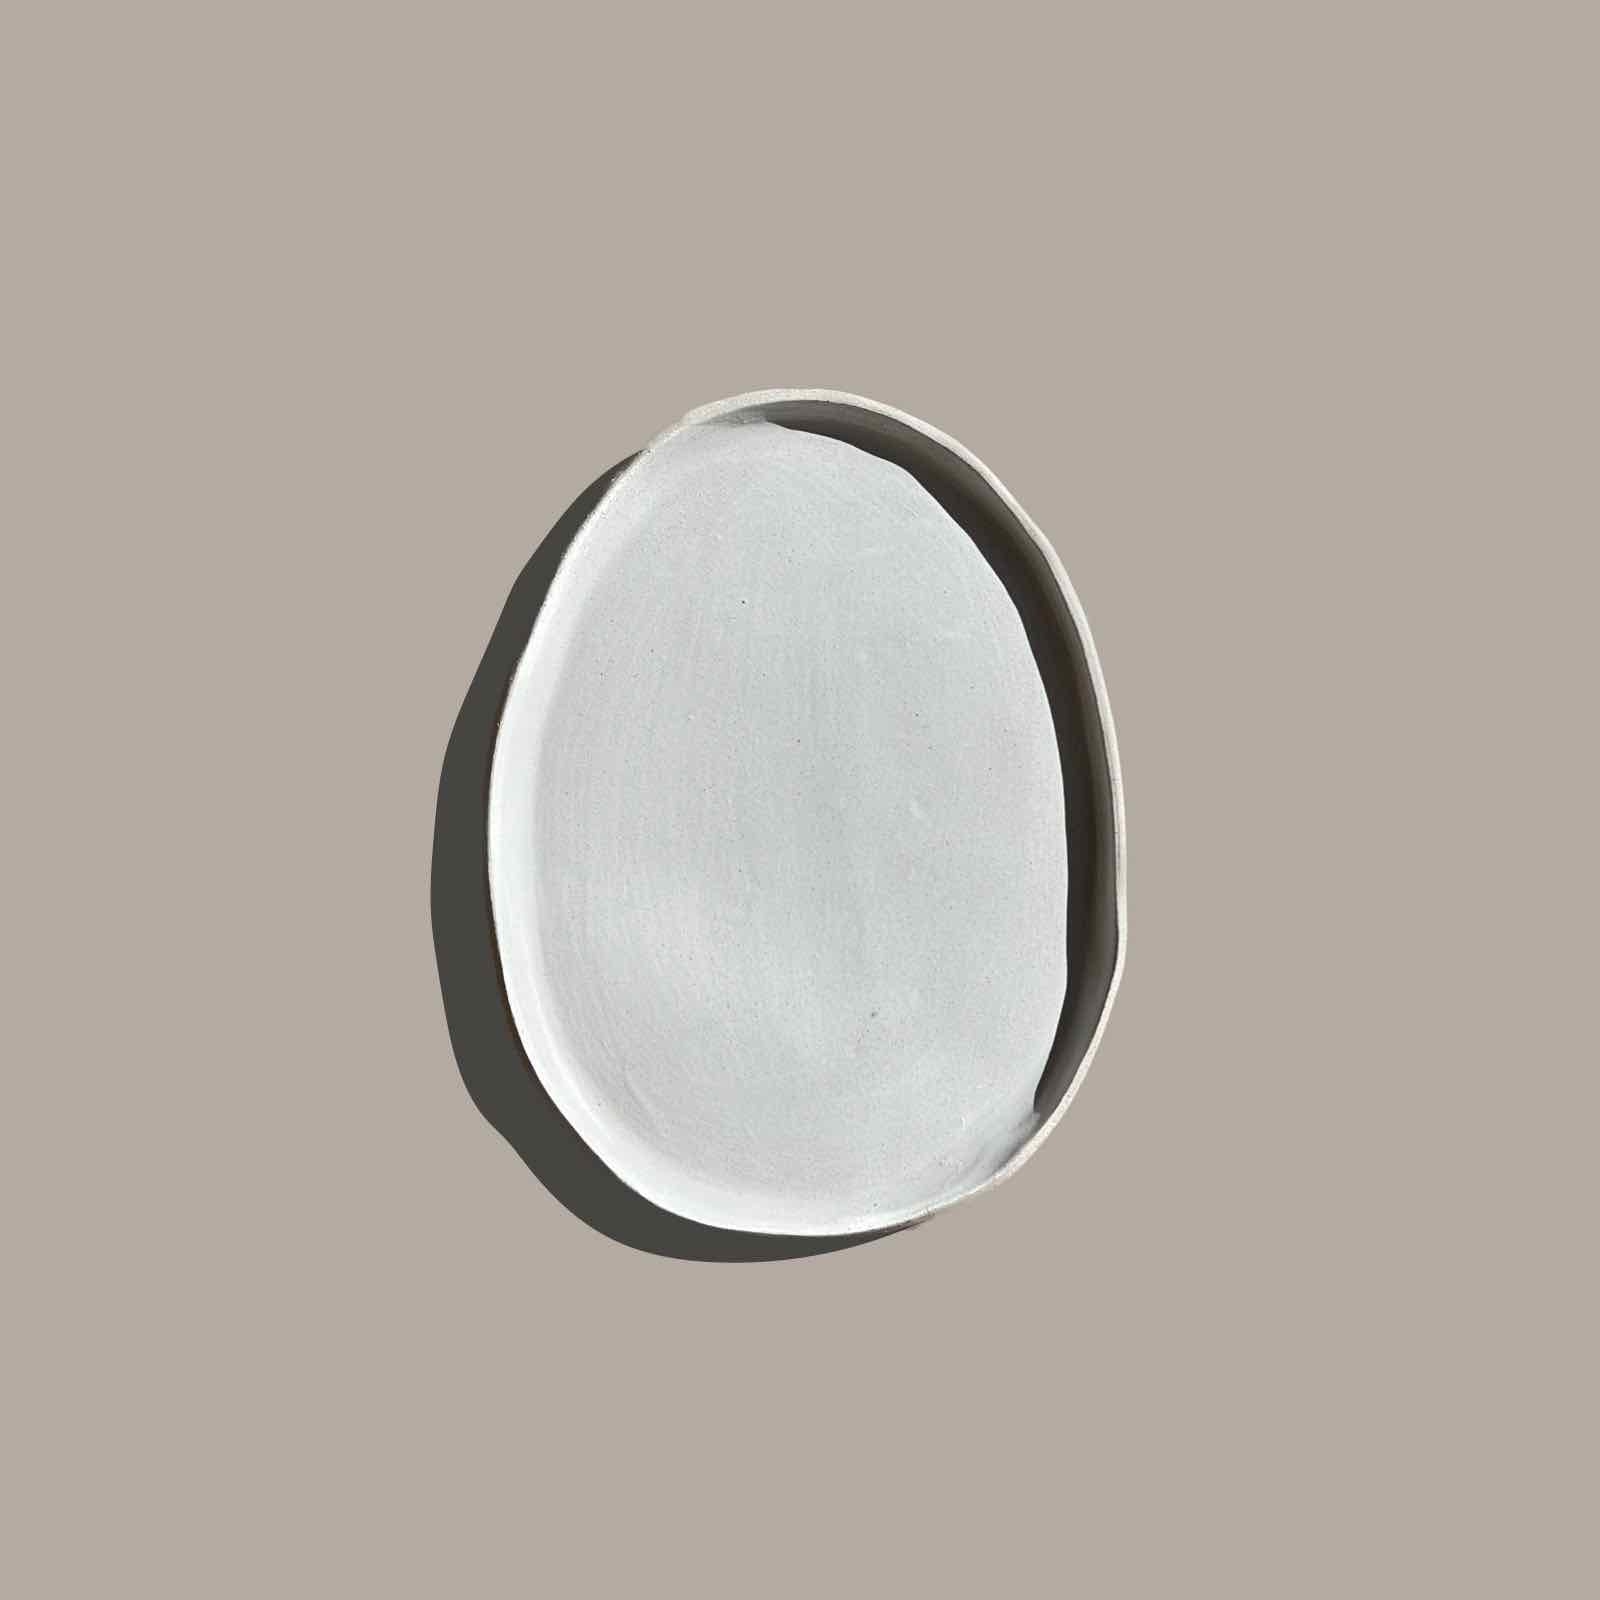 Grey ceramic side plate